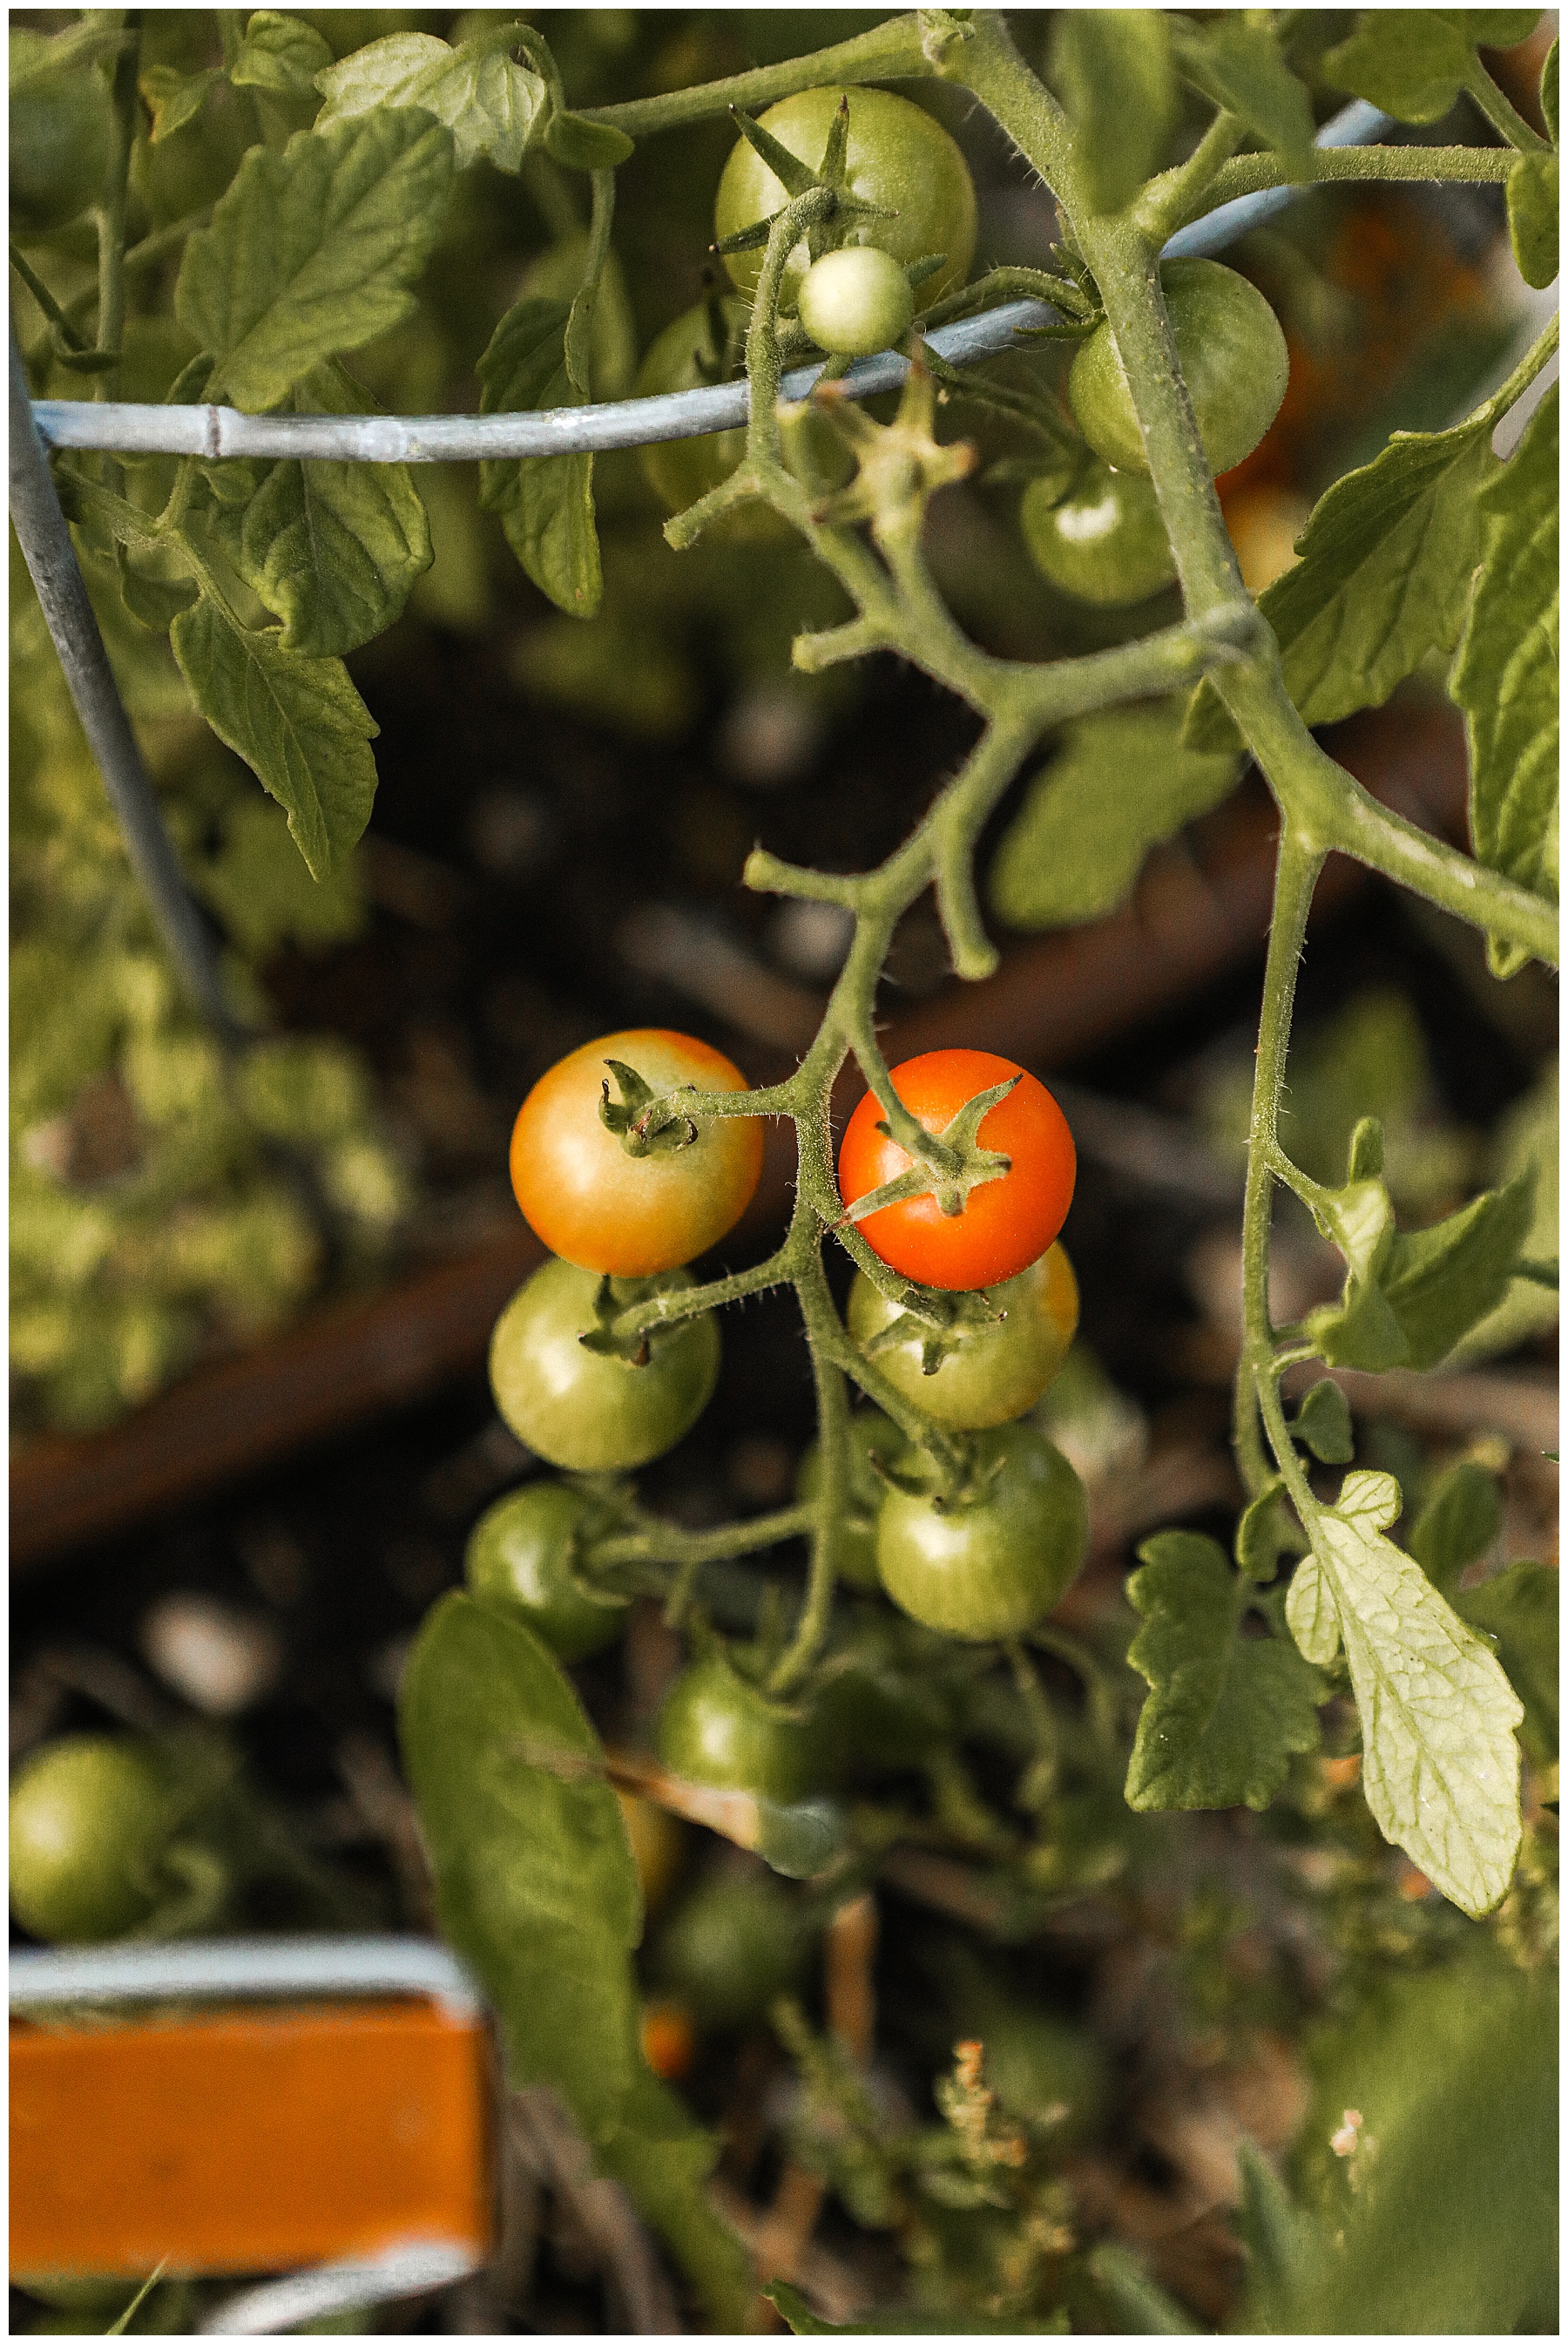 Rupunzel tomatoes